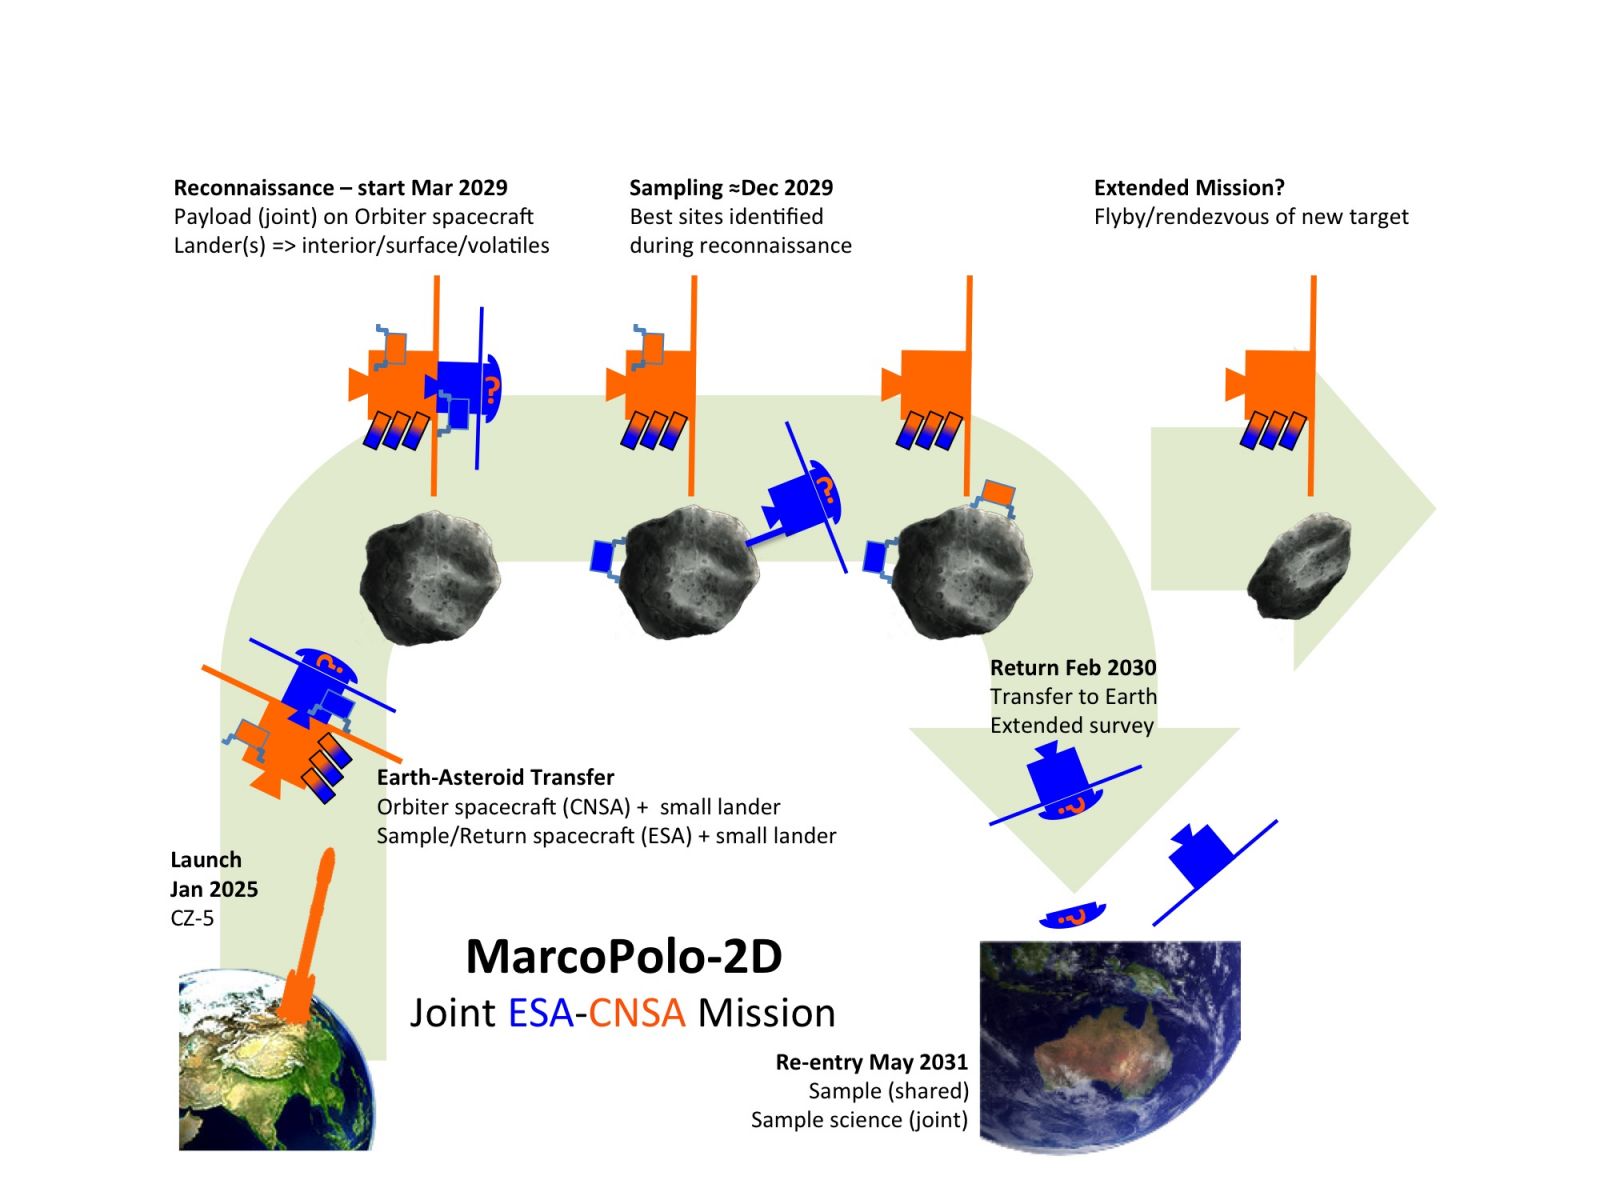 MarcoPolo-2D mission/collaboration